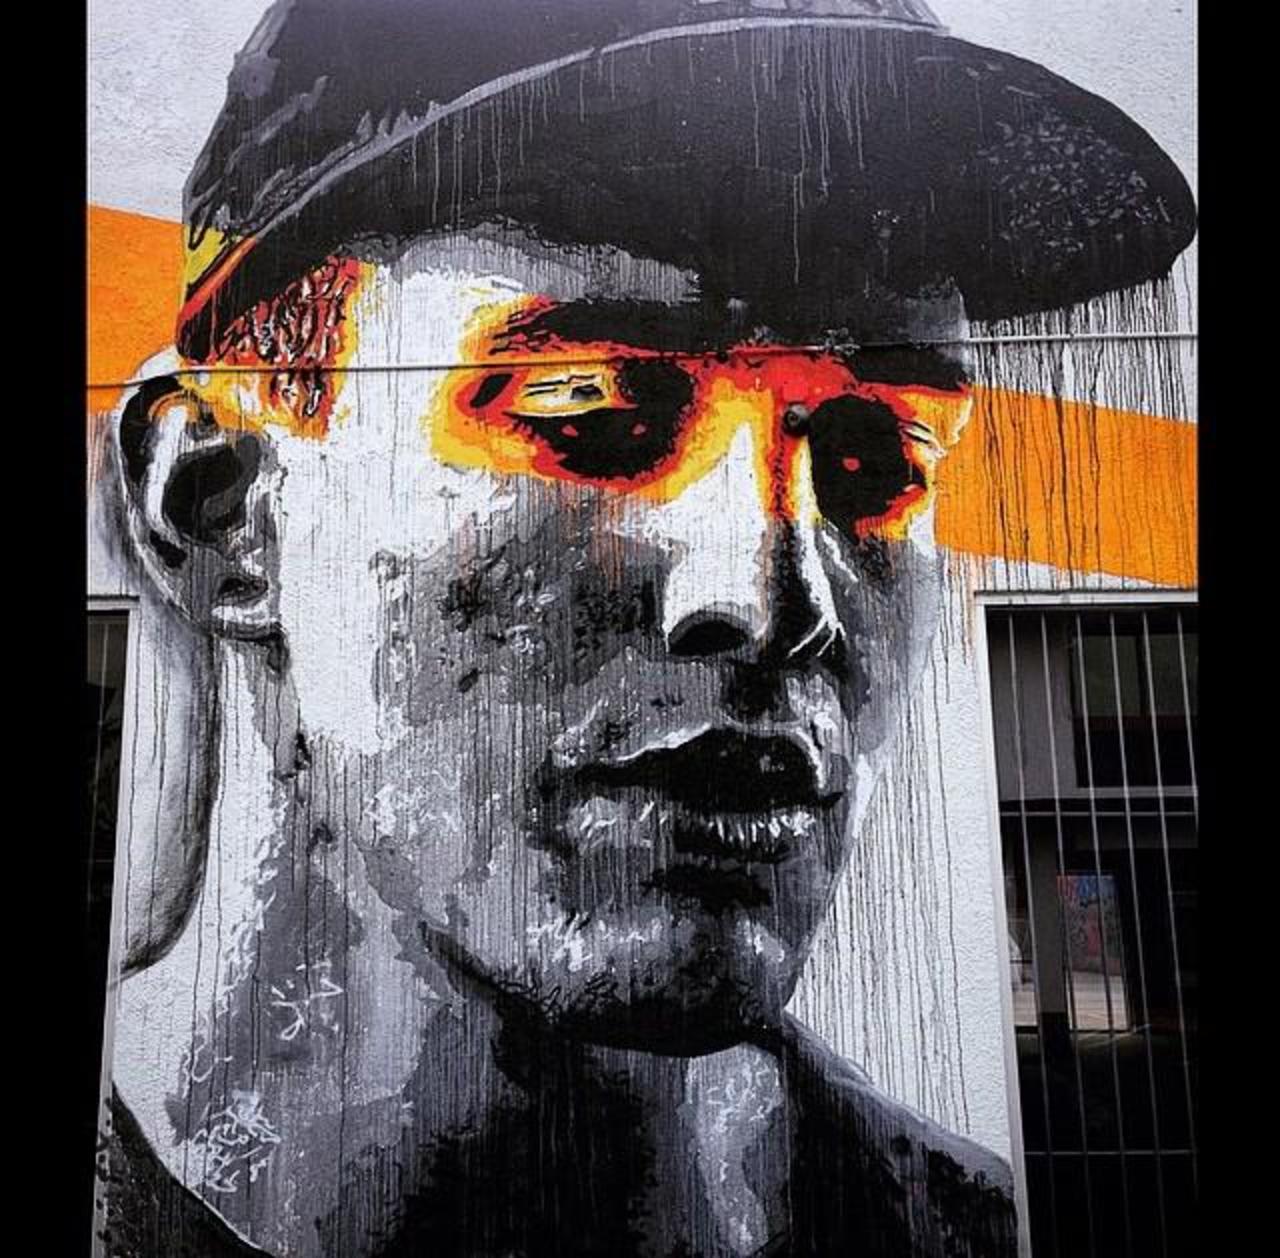 RT@GoogleStreetArt  Artist Nils Westergard Street Art portrait in Miami 

#art #graffiti #mural #streetart http://t.co/NjaUrmLnLK